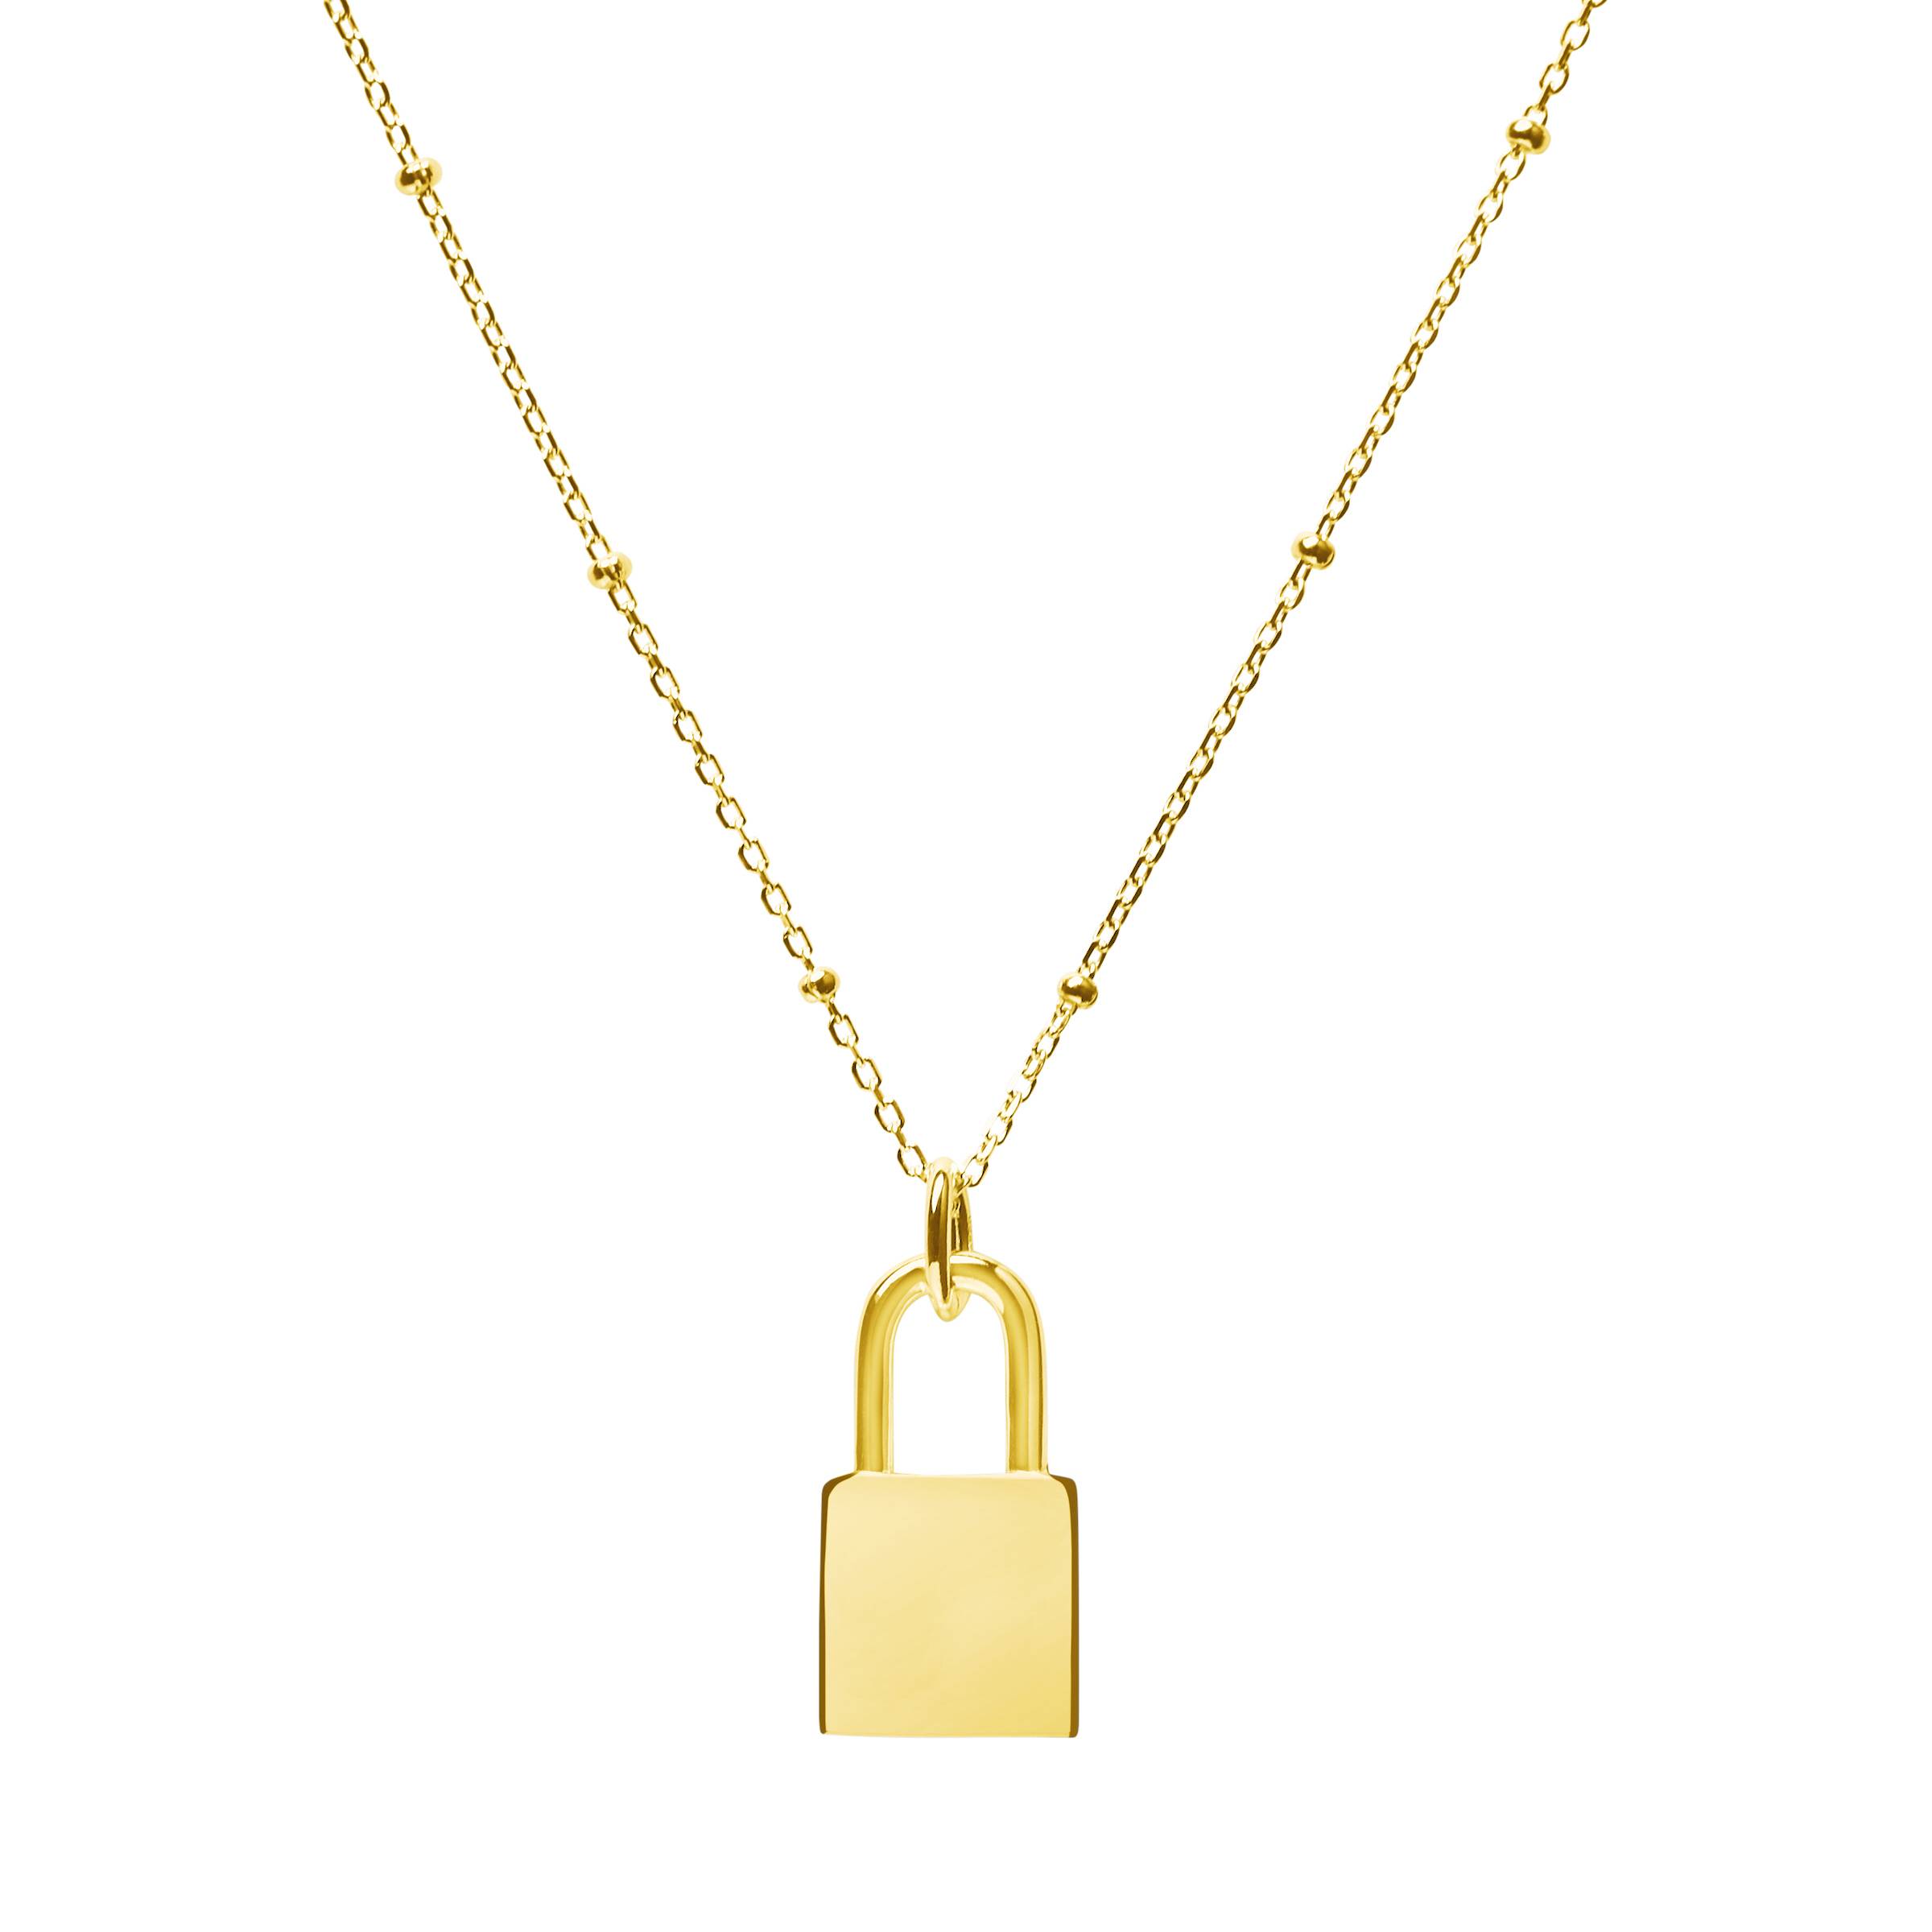 yellow gold satellite chain with lock pendant